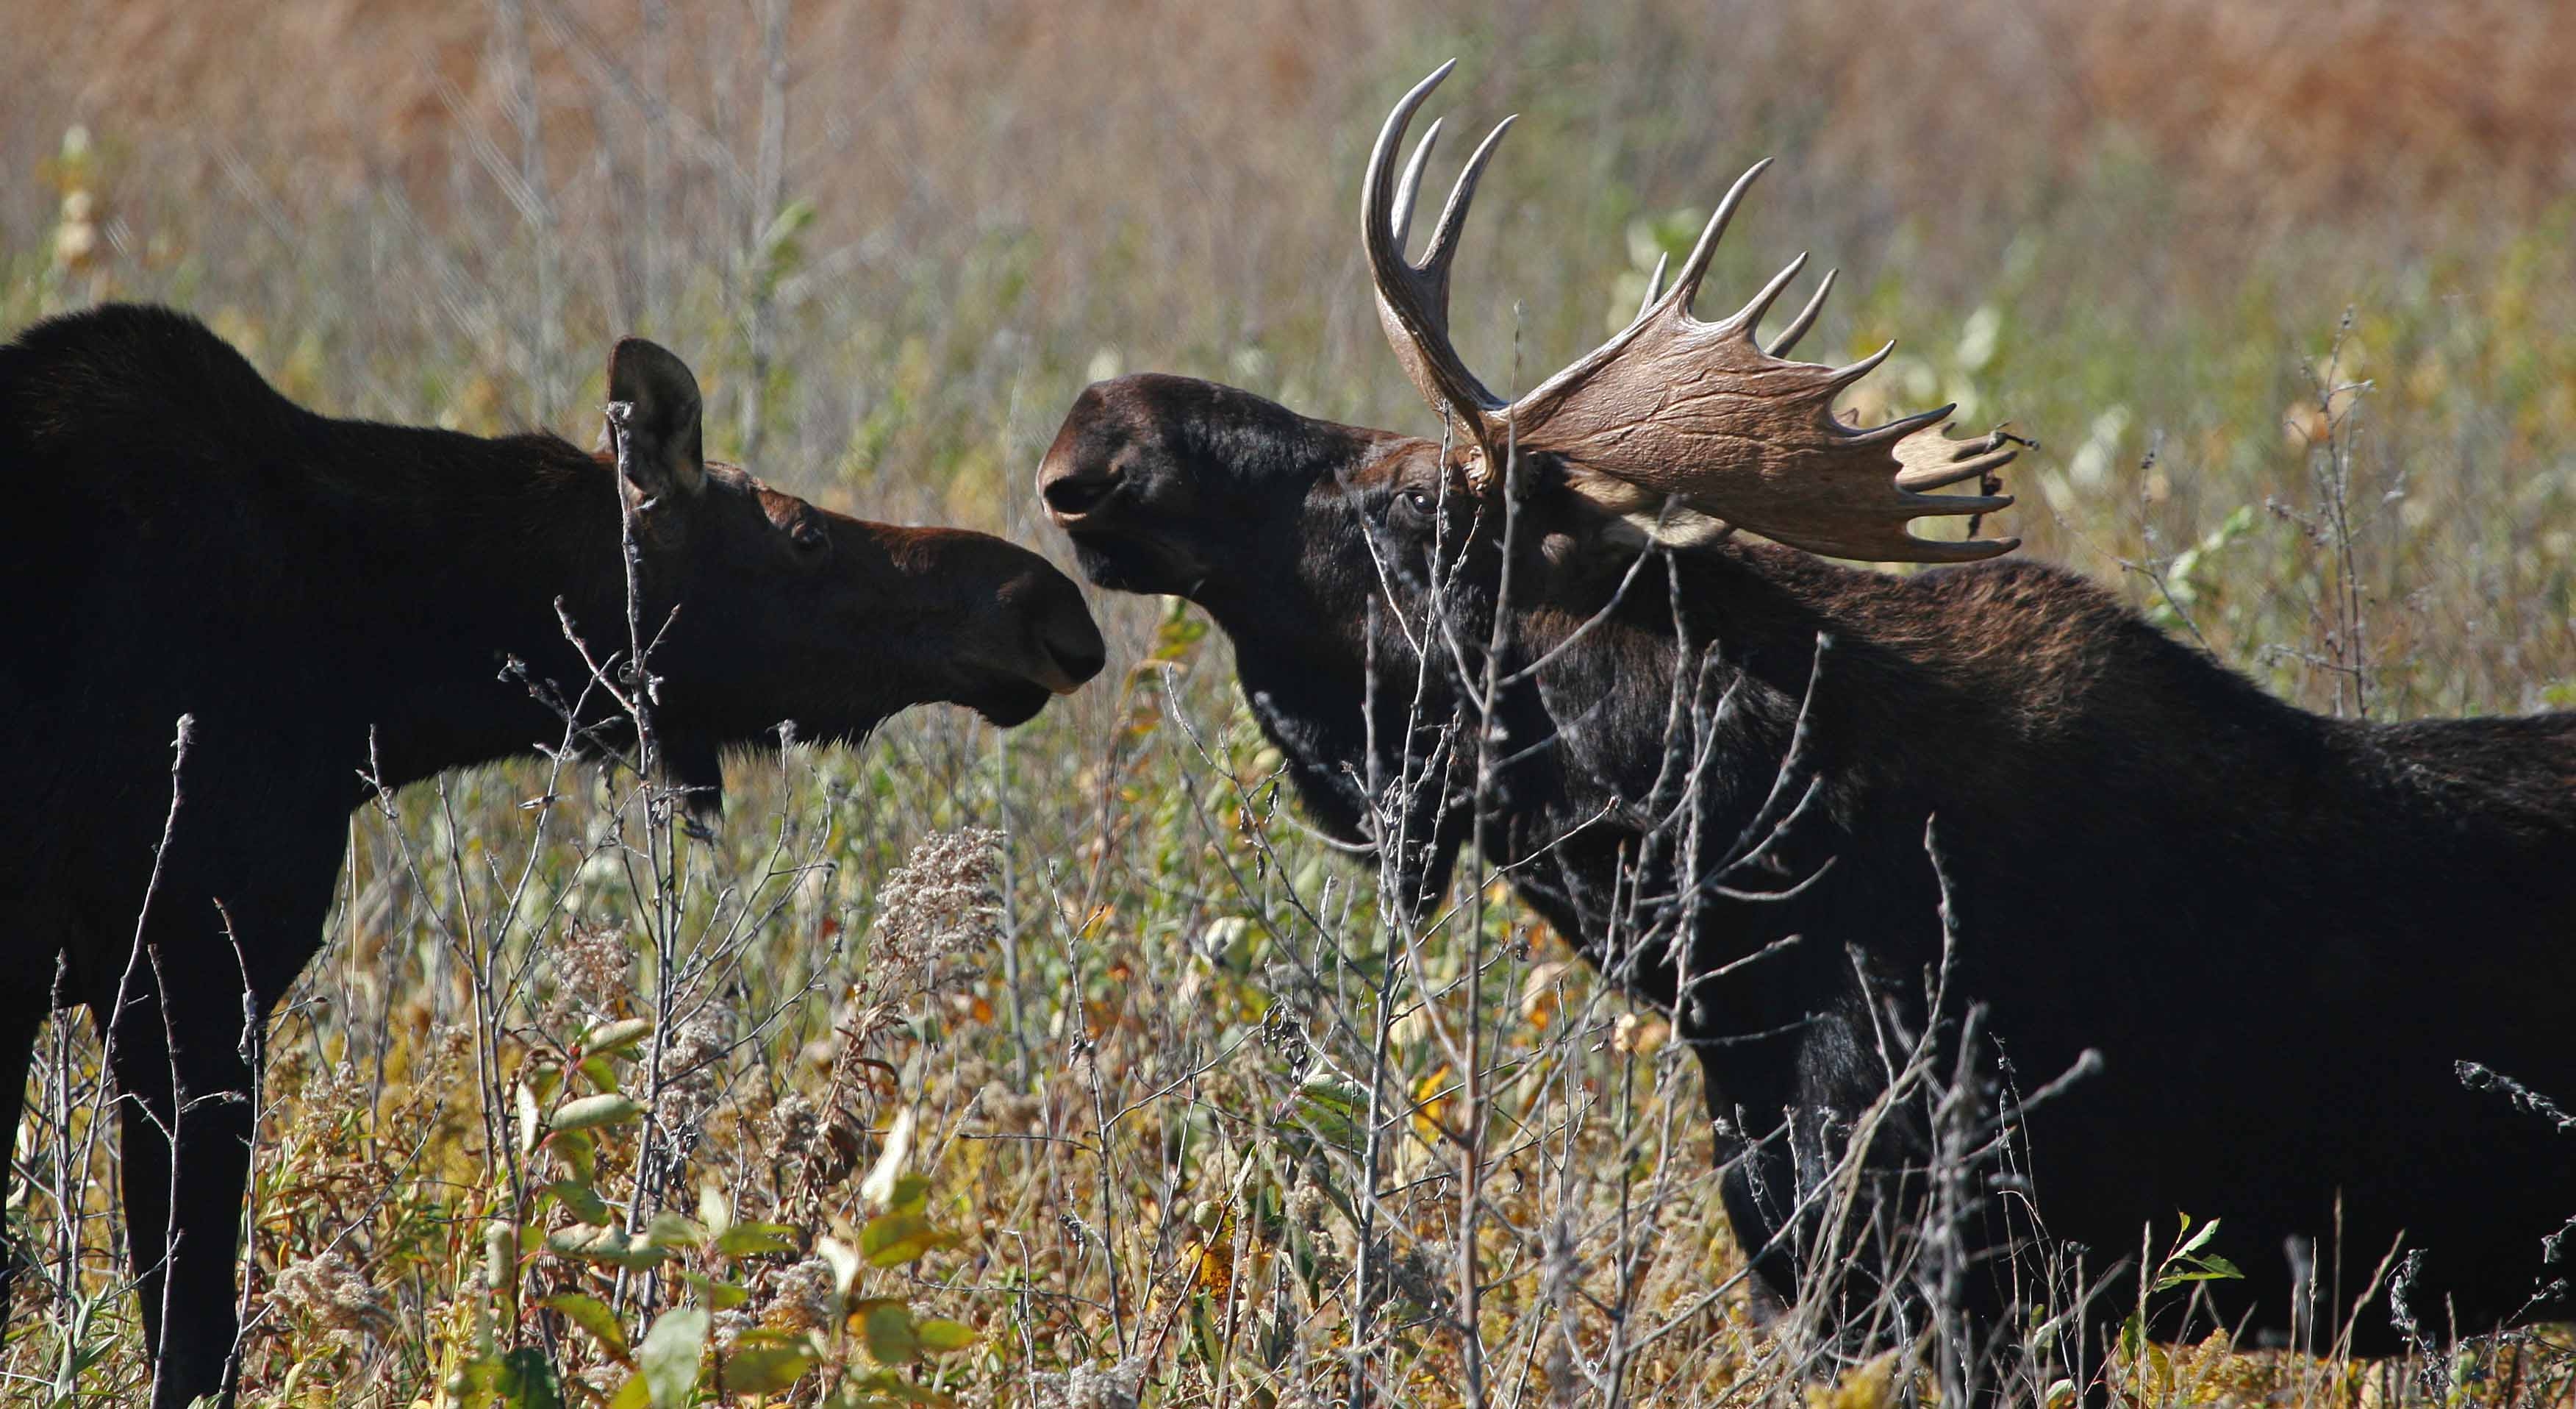 Two moose at Agassiz National Wildlife Refuge